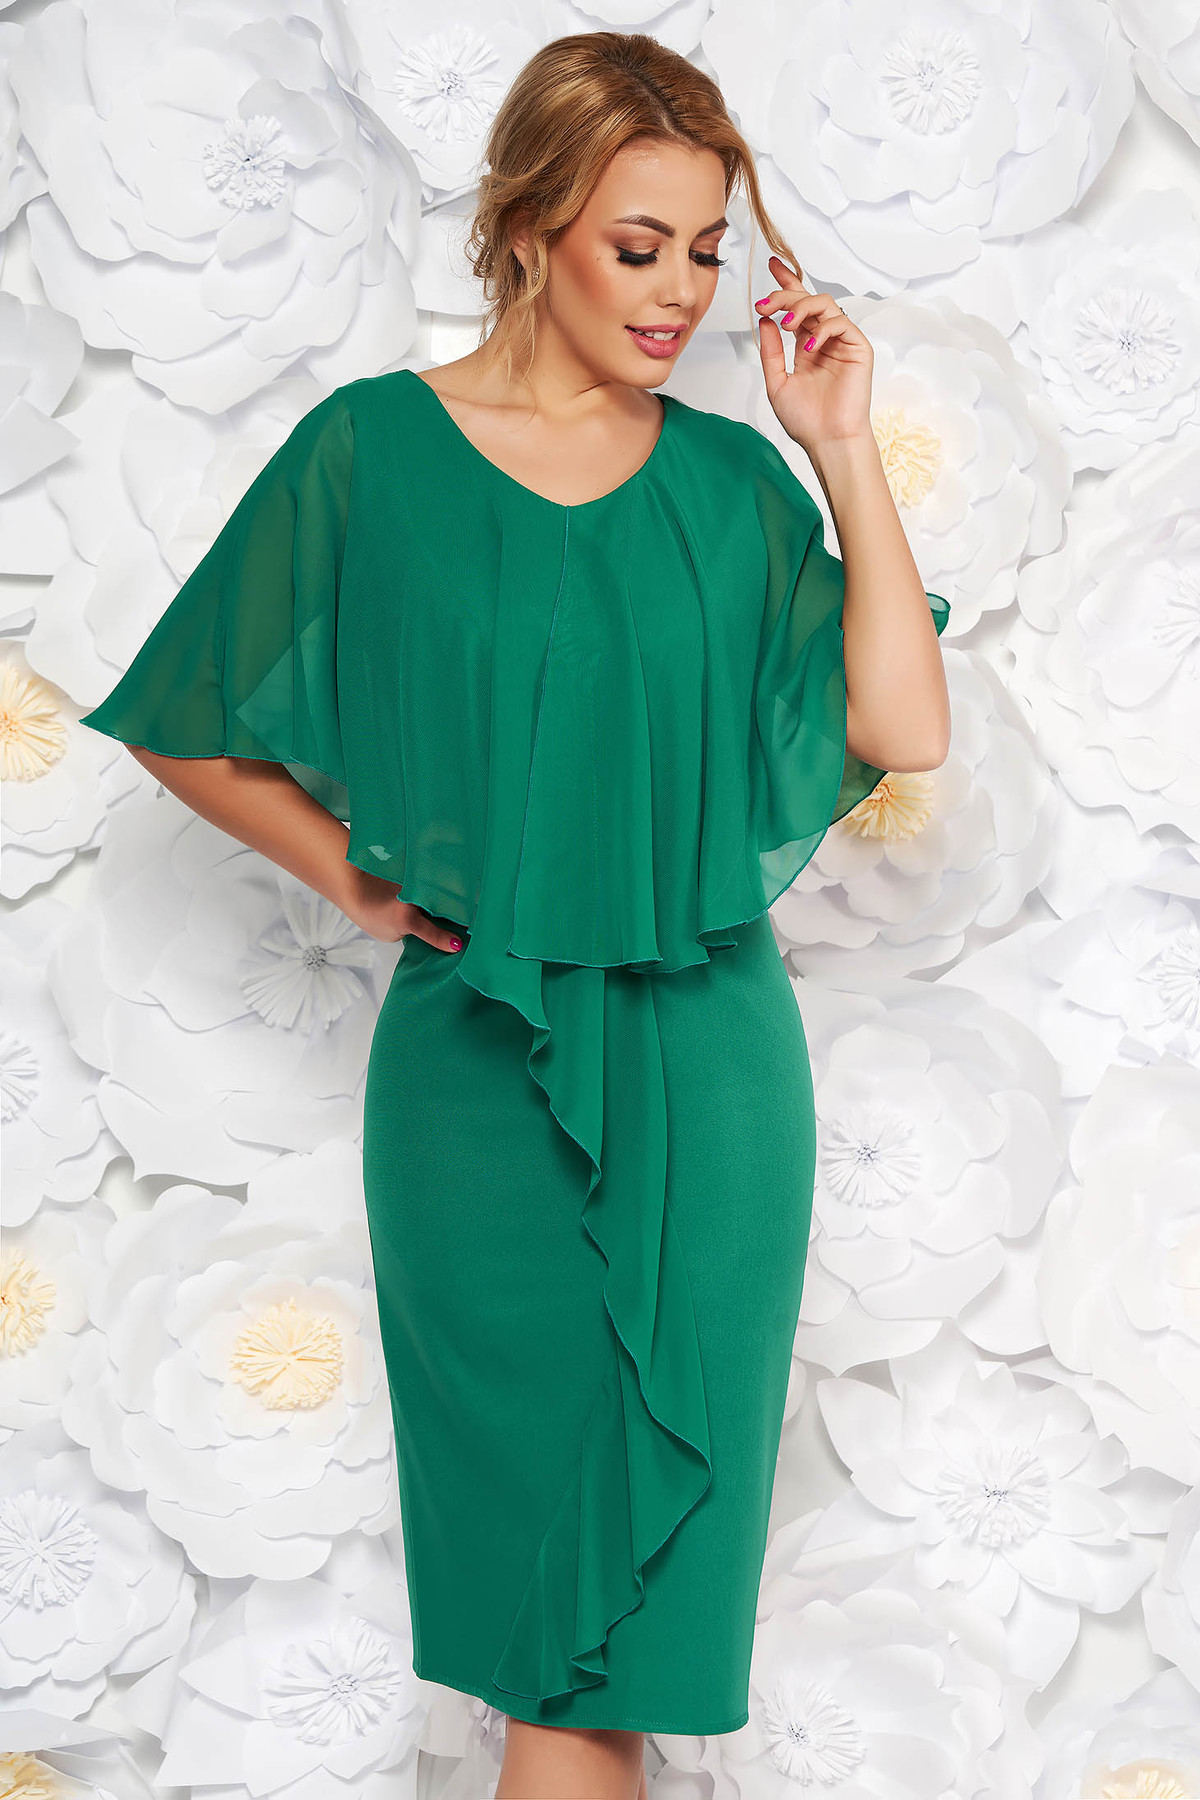 Rochie verde midi de ocazie fara maneci cu un croi cambrat din stofa subtire usor elastica si suprapunere cu voal